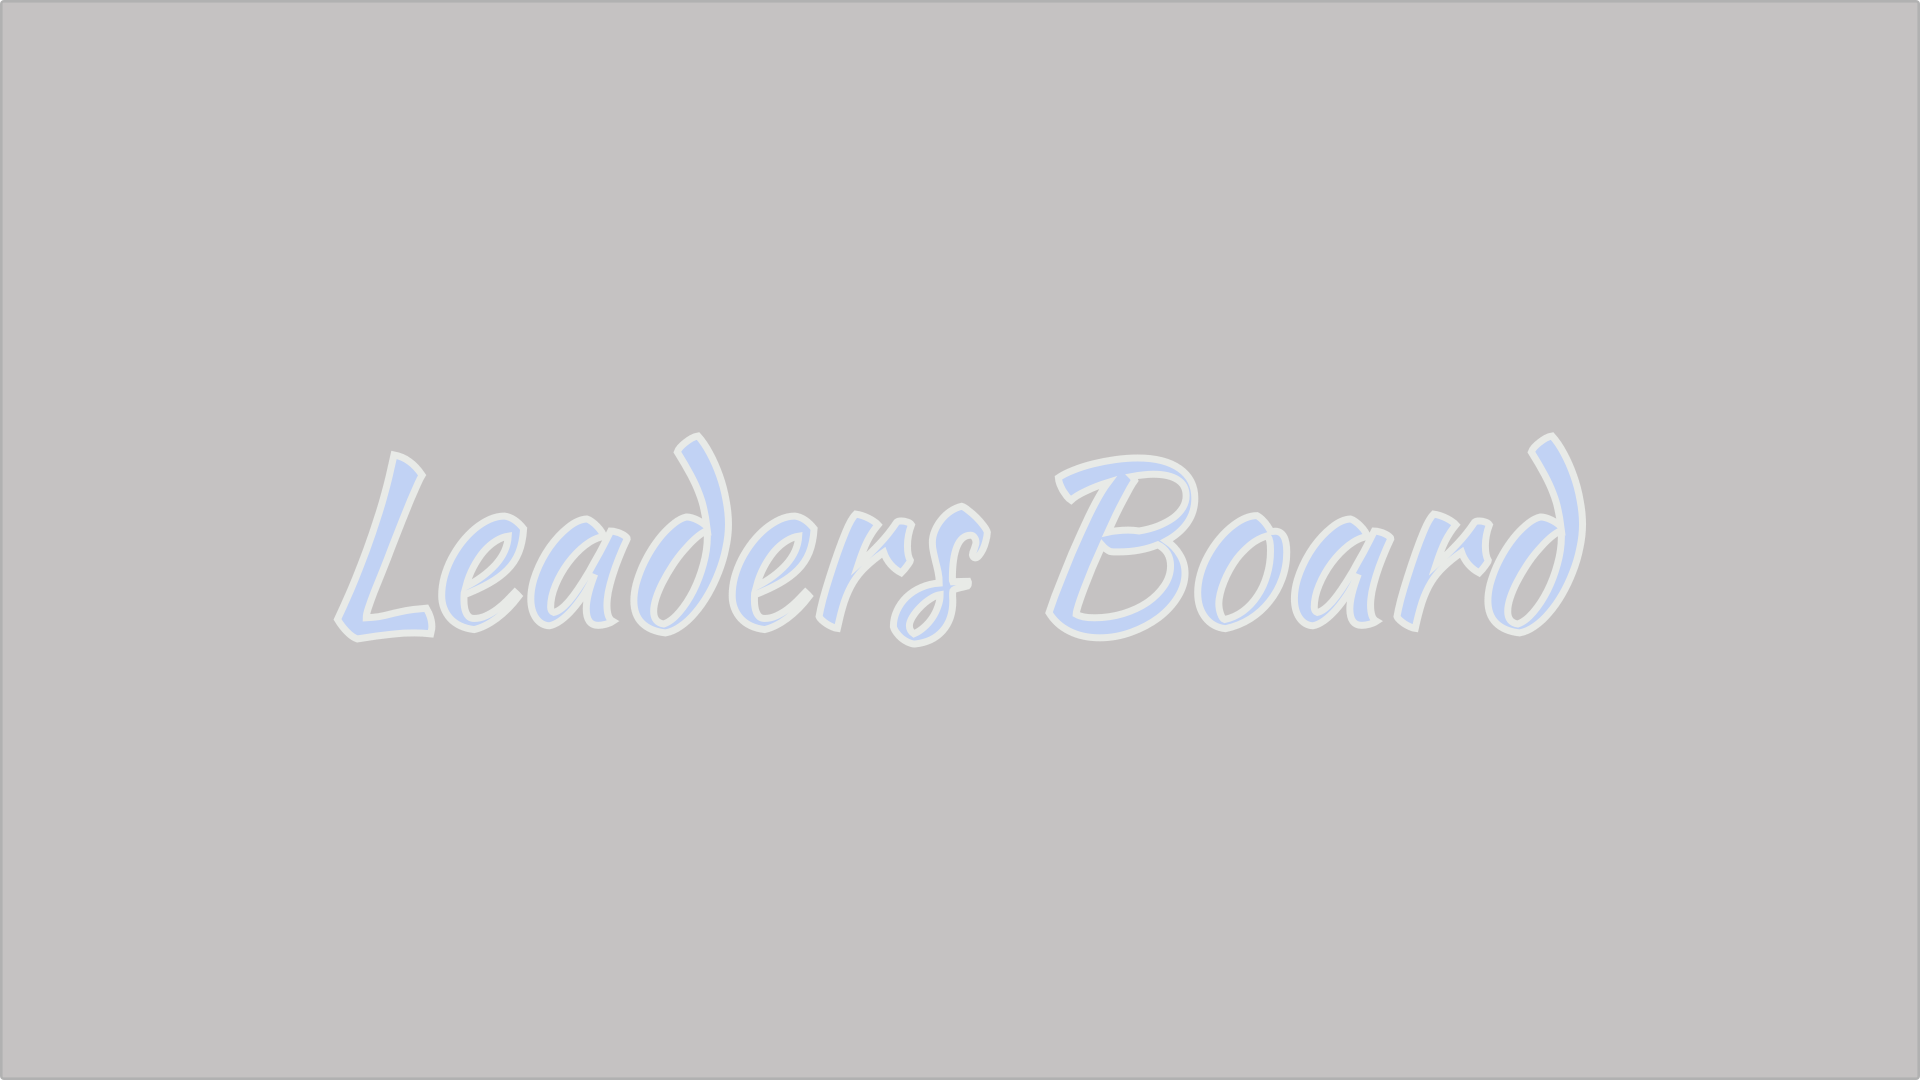 Leaders Board